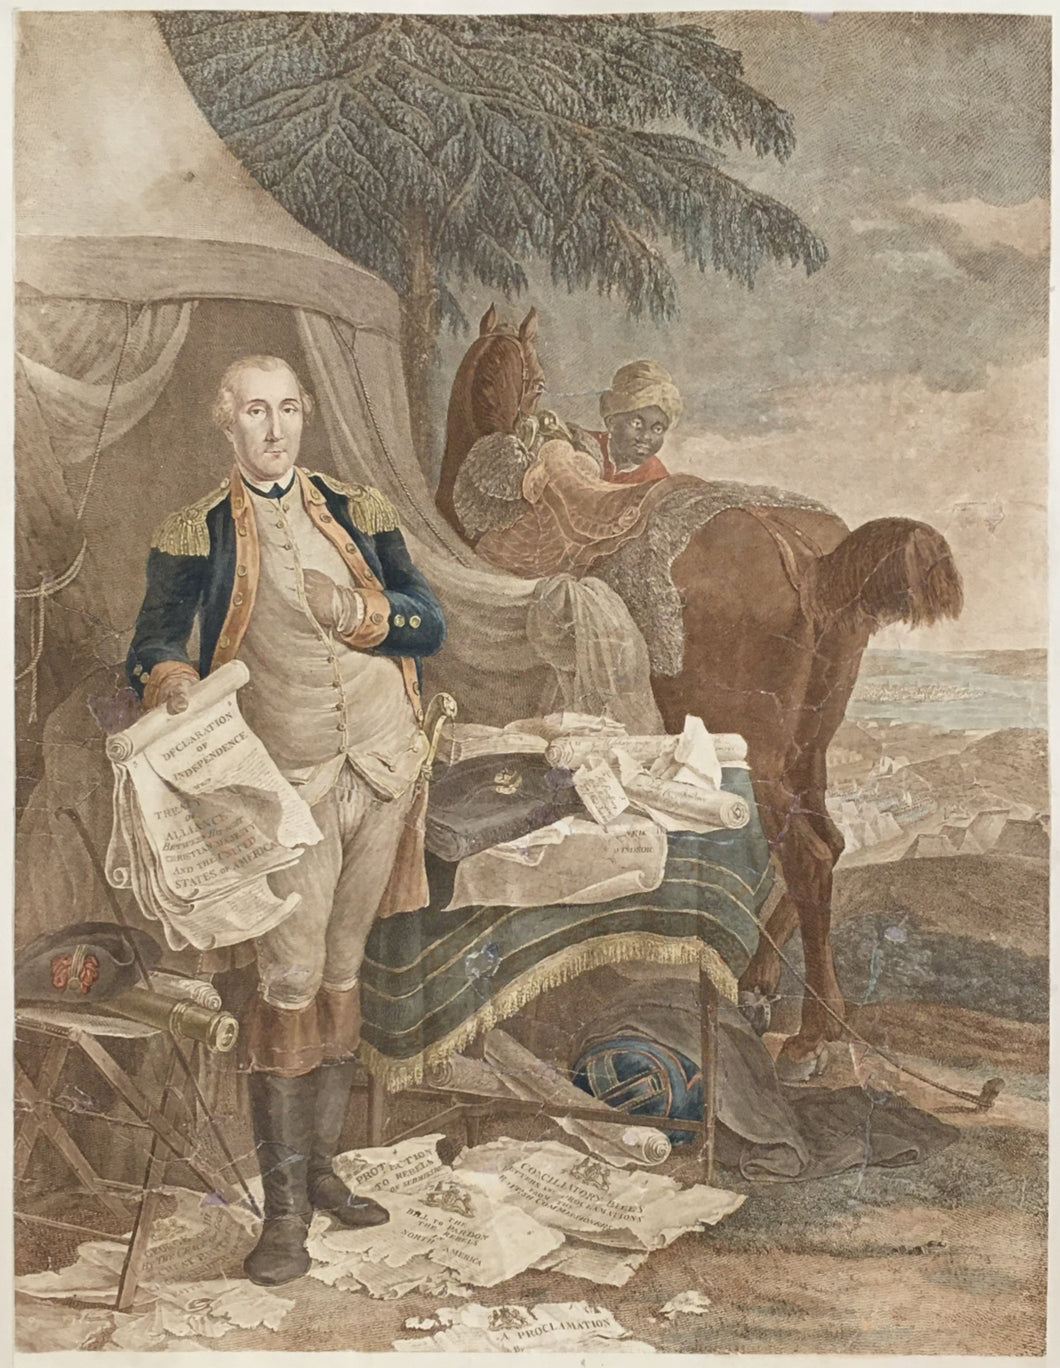 Le Paon, Jean Baptiste after Peale, Charles Willson “Washington